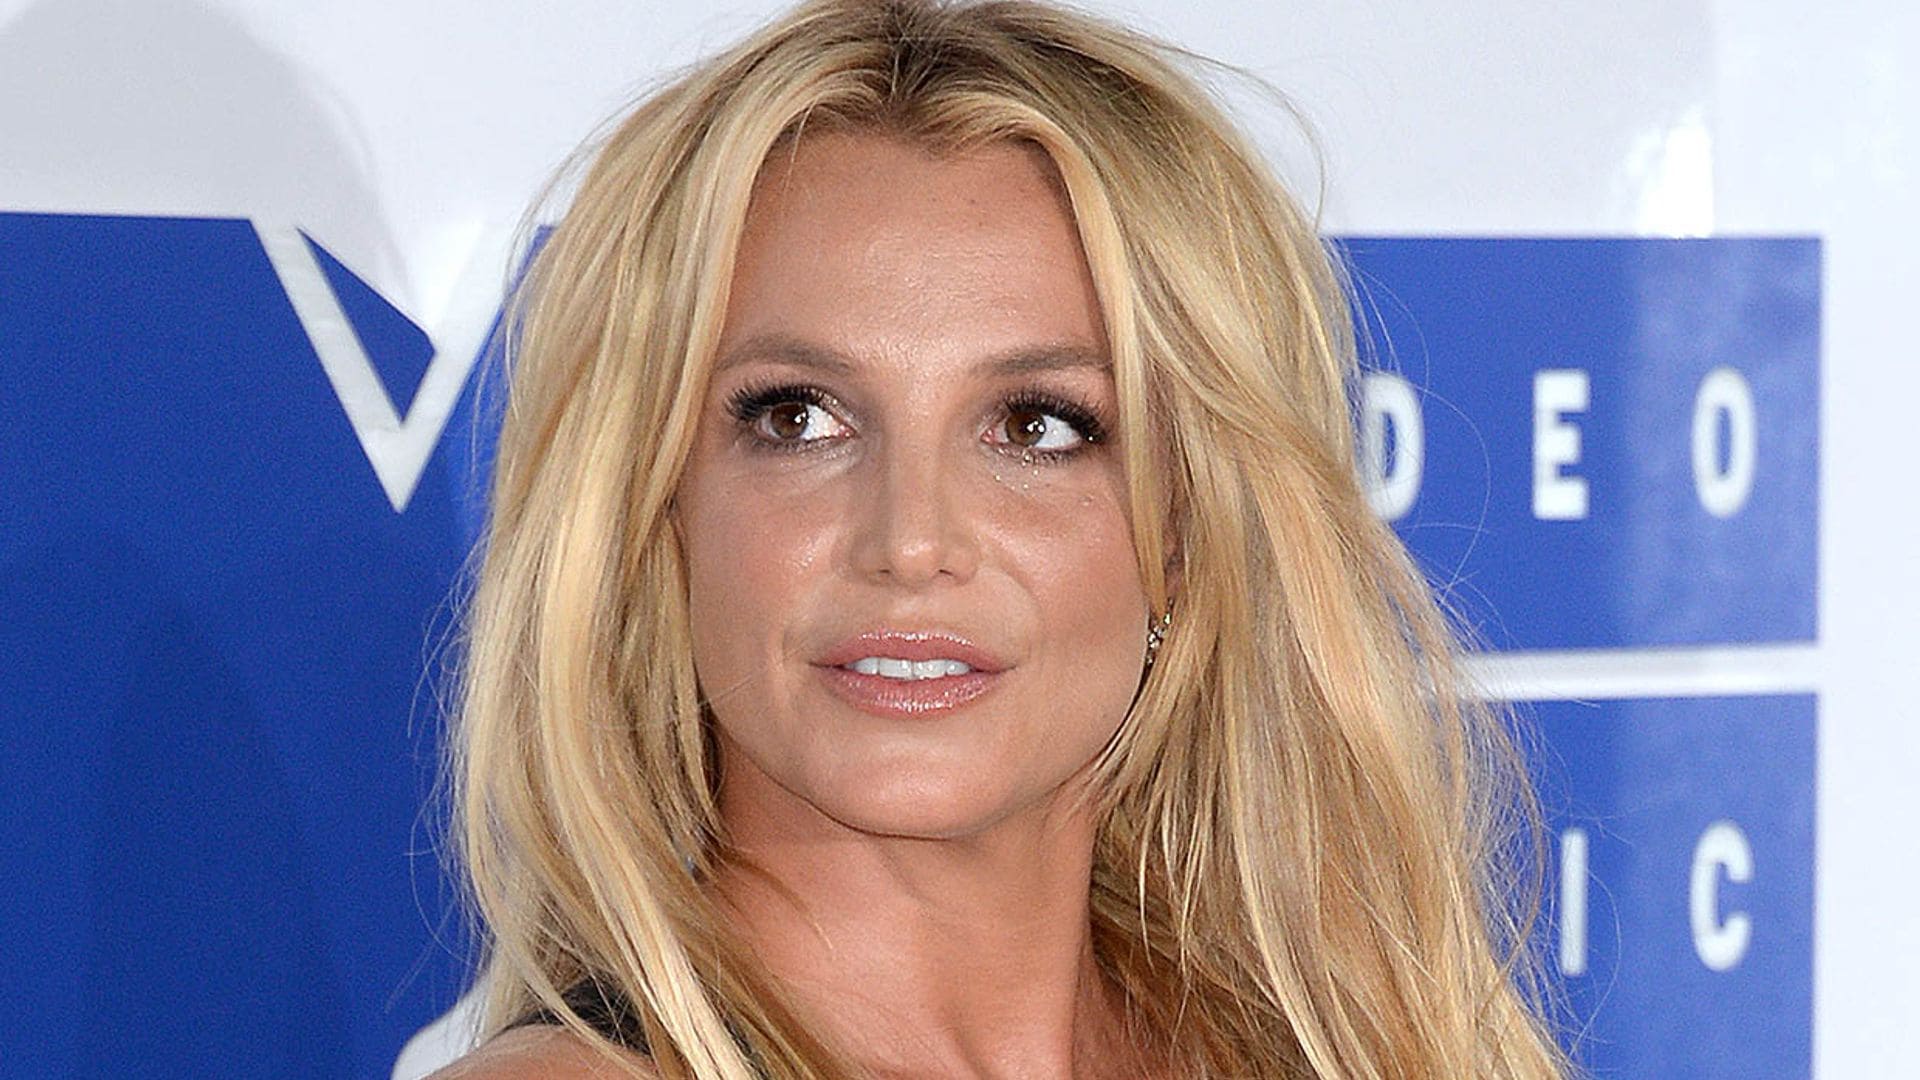 Britney Spears aparca su carrera musical hasta que consiga liberarse de la tutela paterna